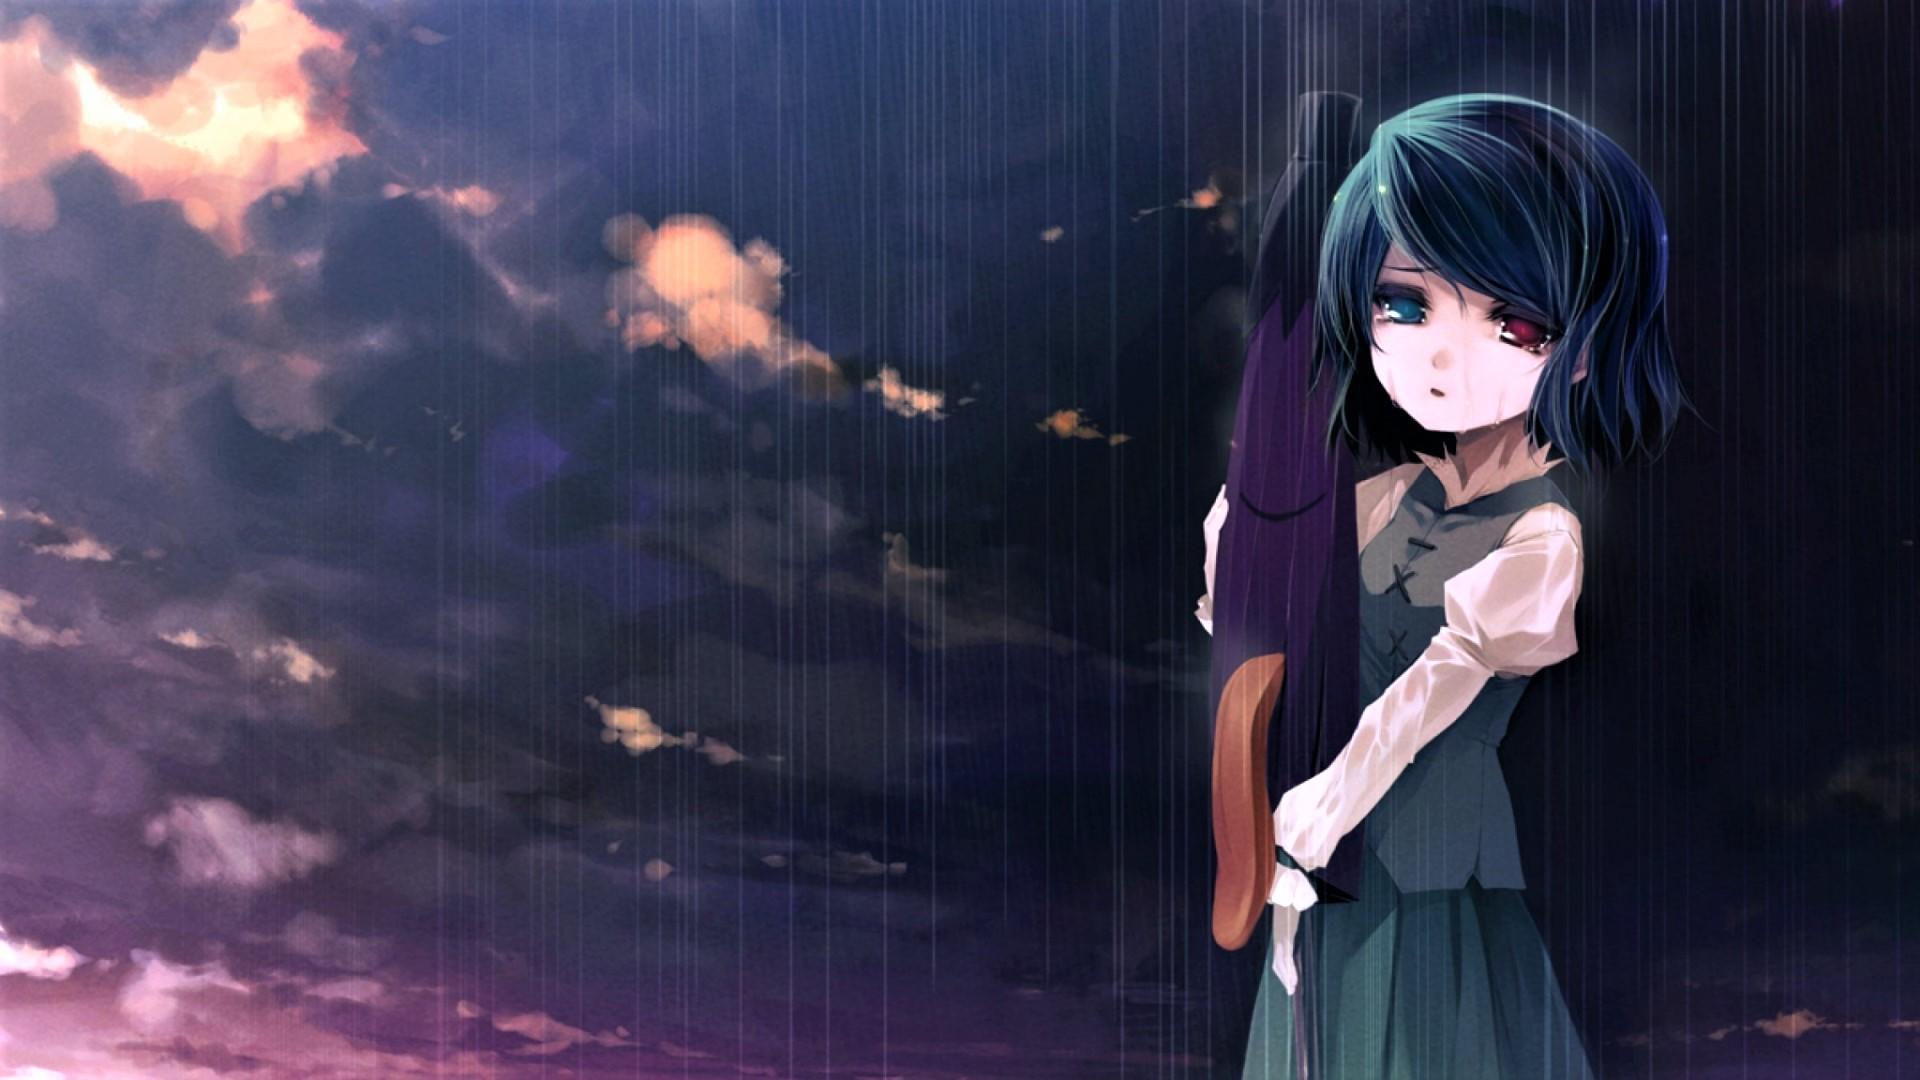 Sad Anime Girl in the Rain HD Wallpaper. Background Image